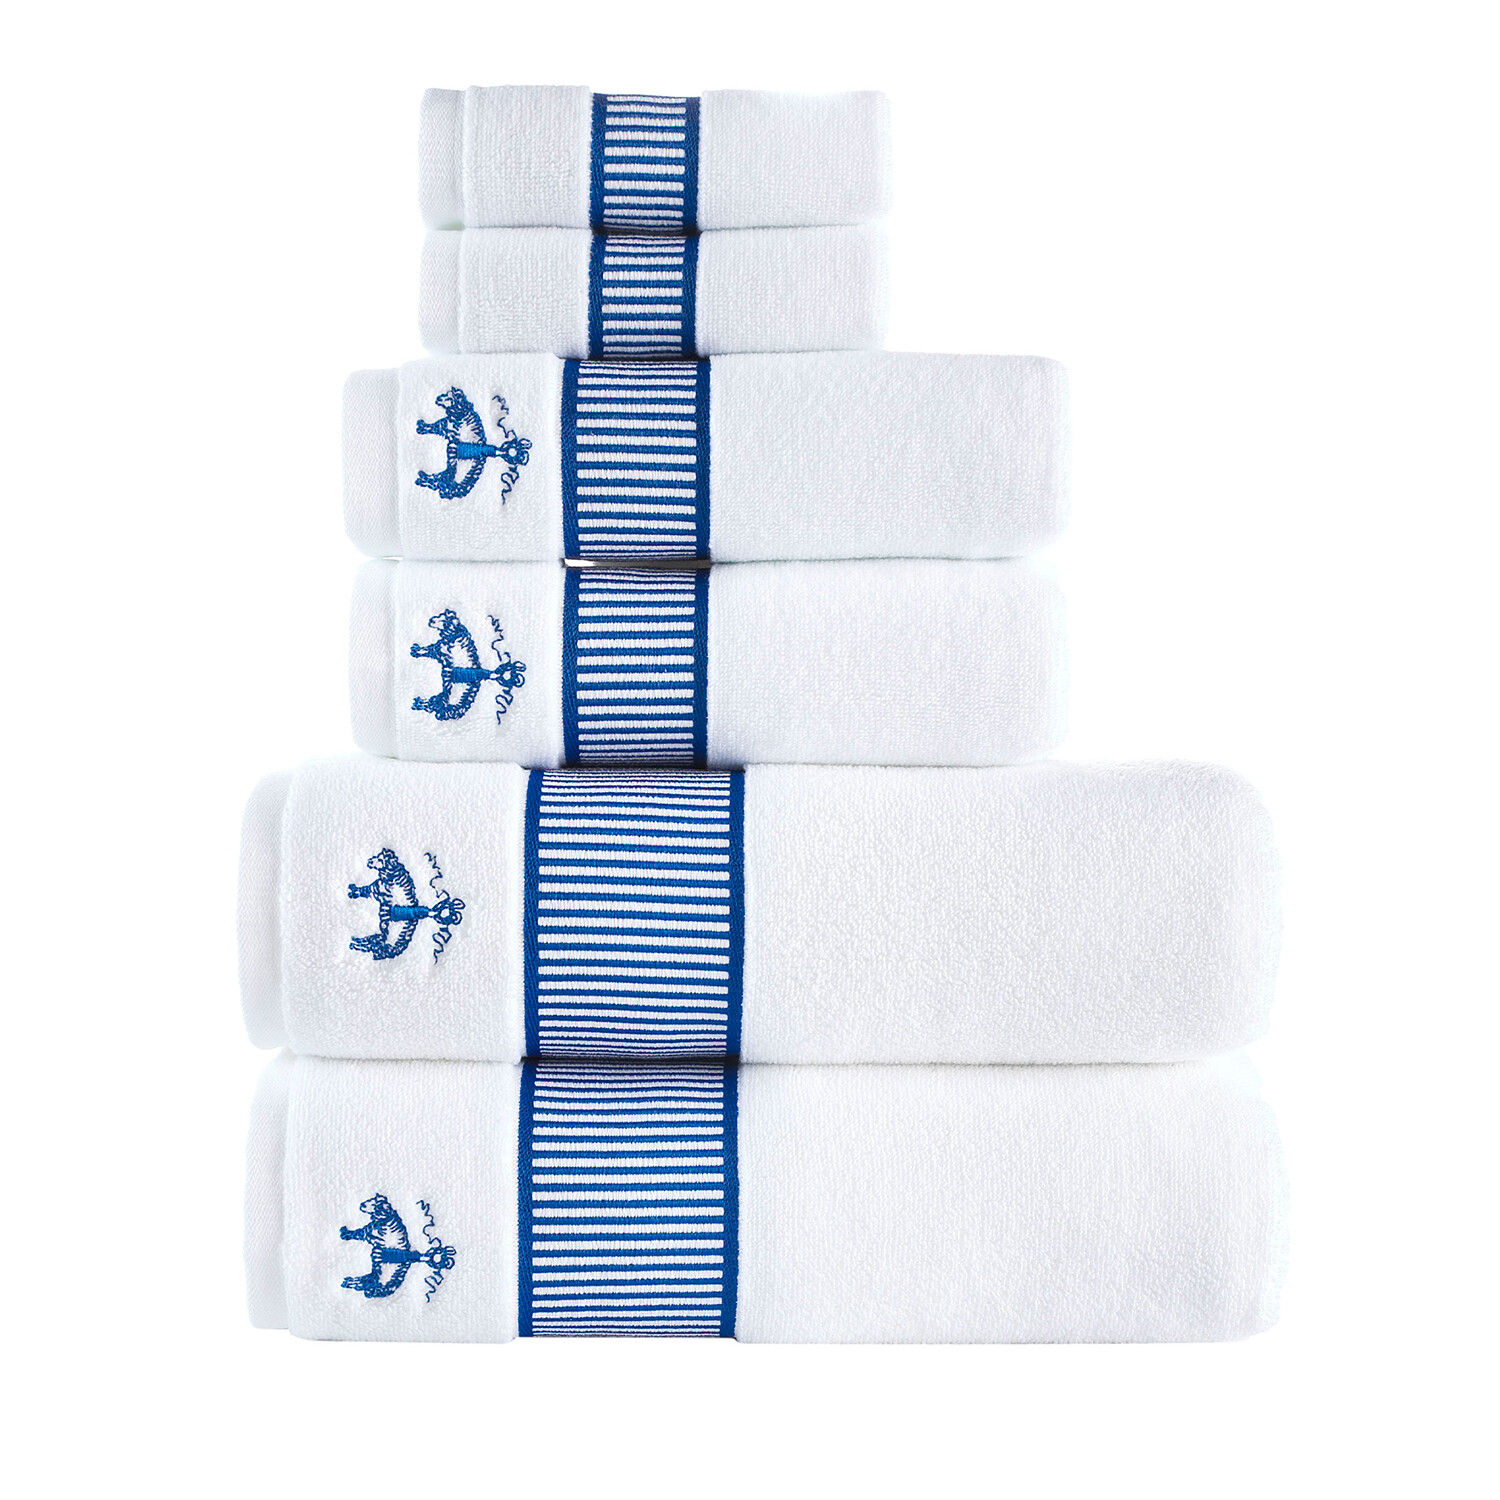 Fancy Border Towel Set // Set of 6 (Royal Blue) - Brooks Brothers Bath ...